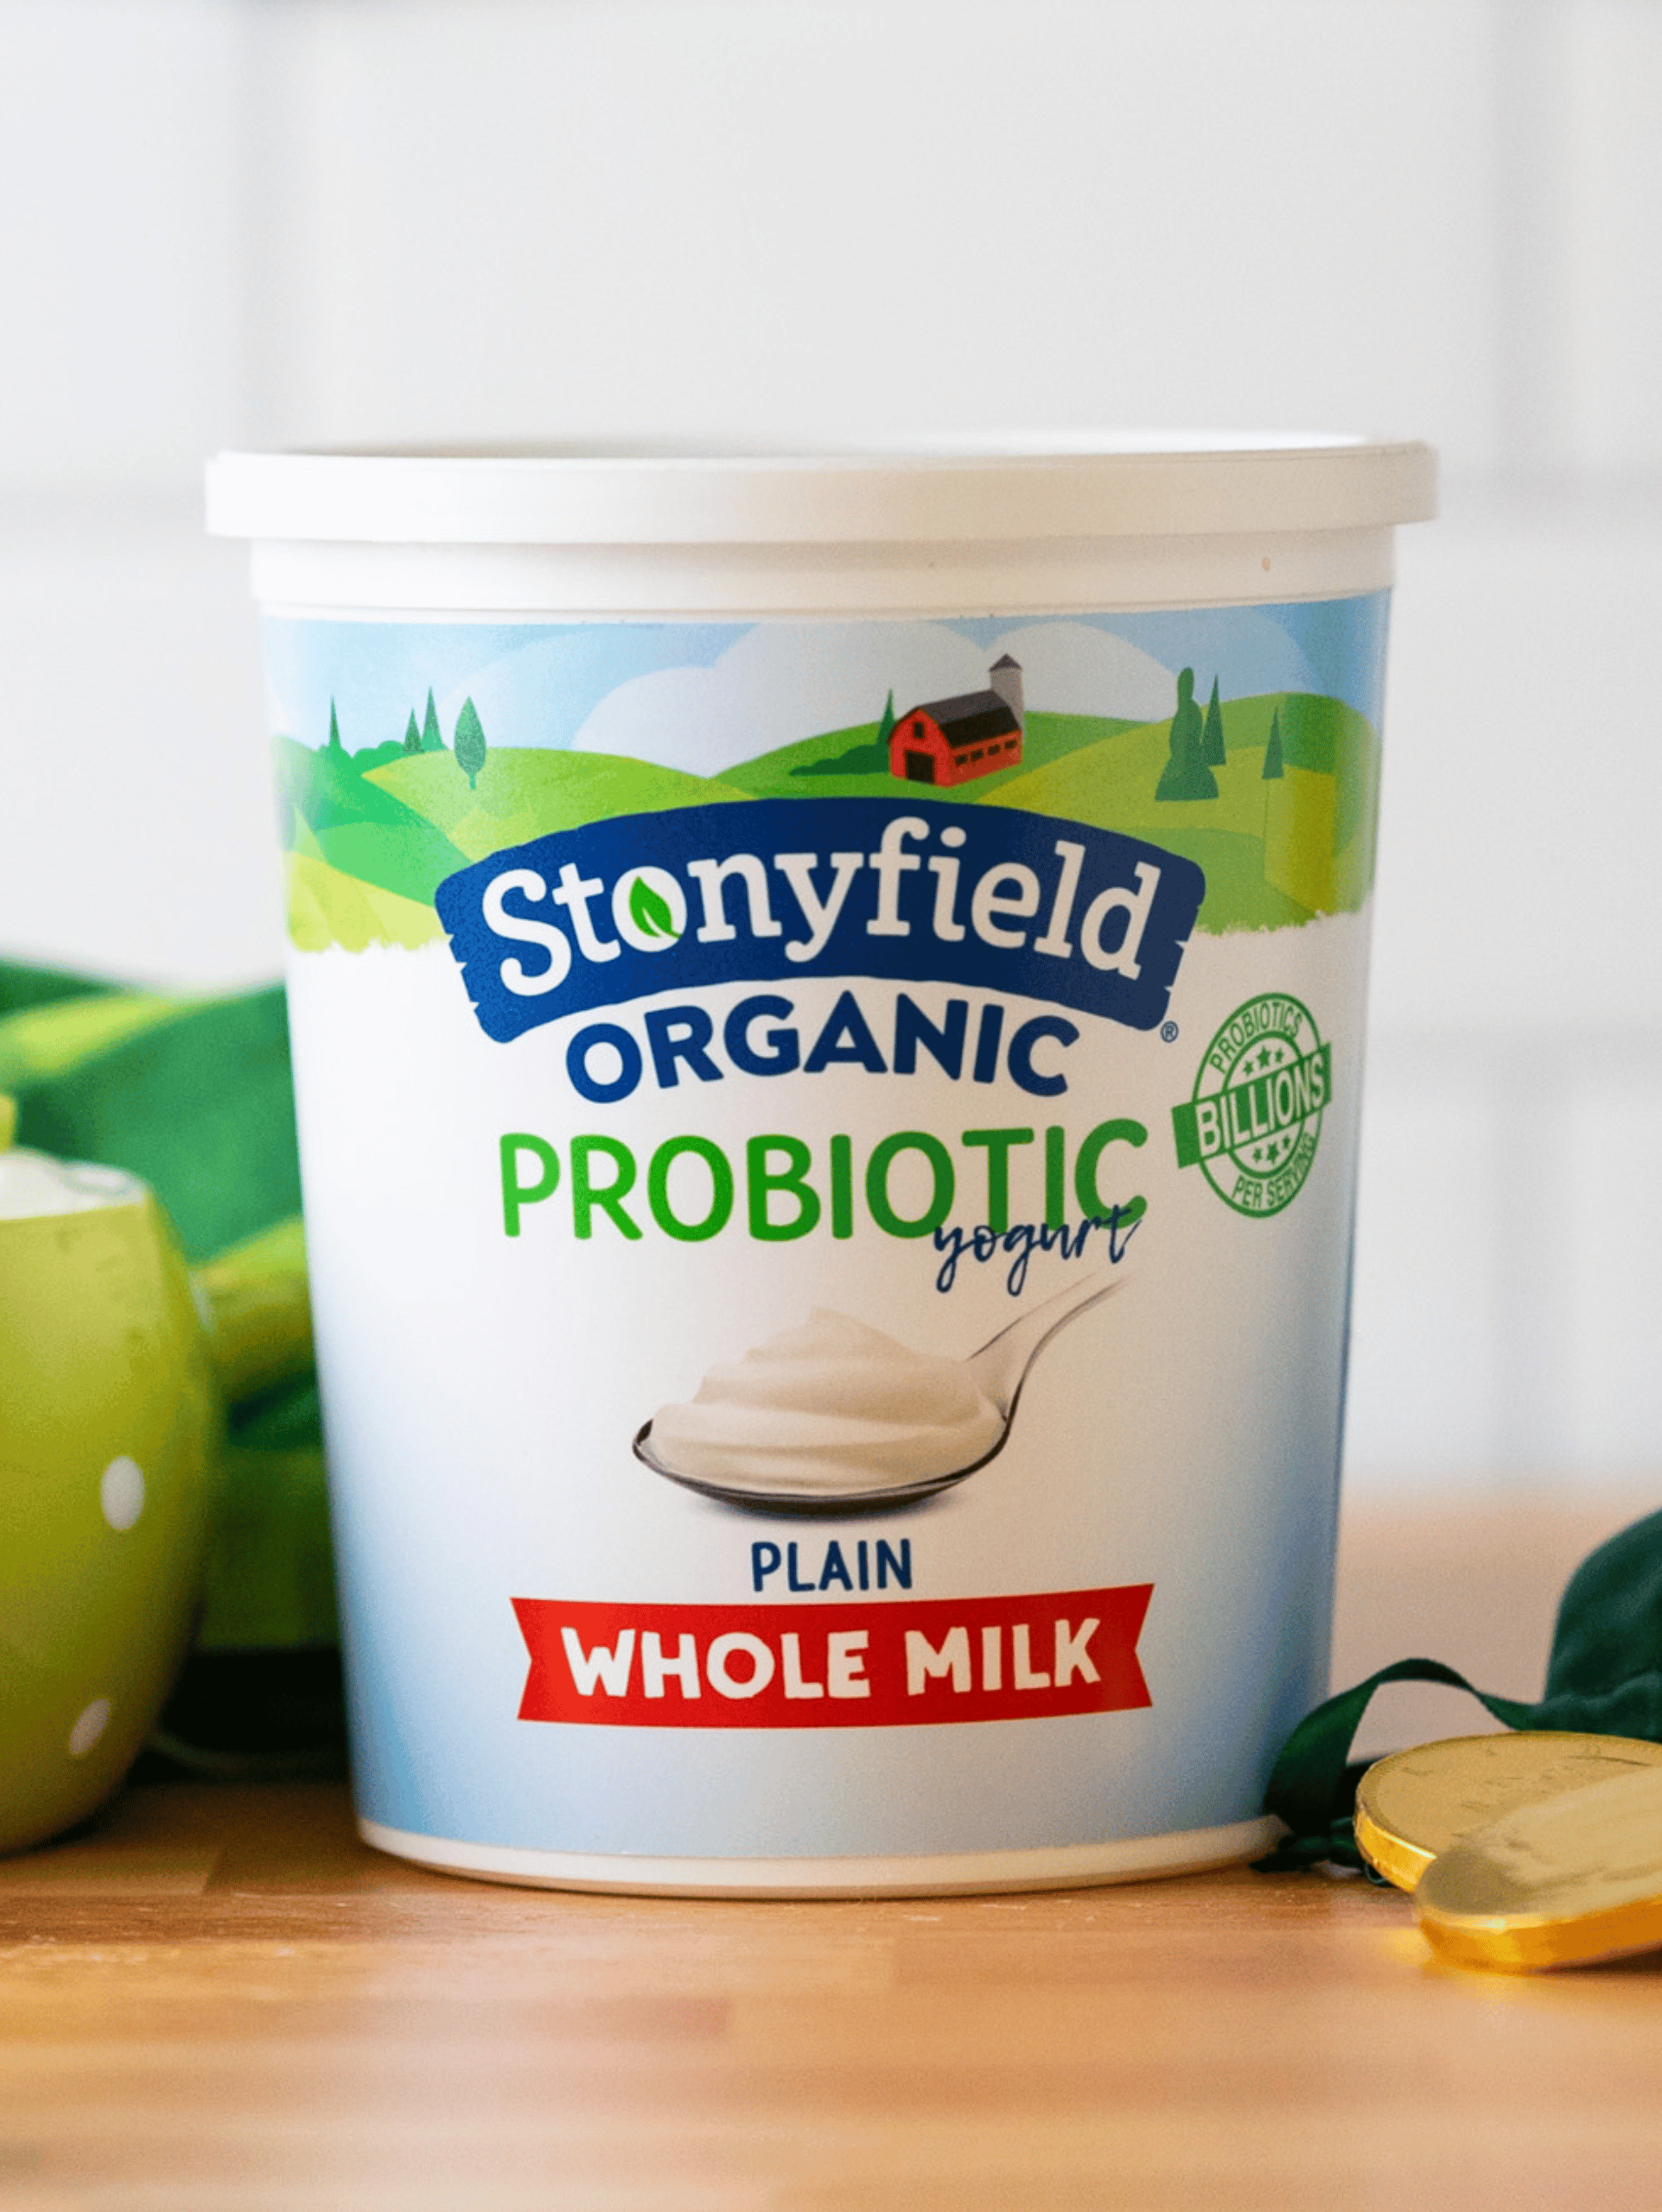 Stonyfield Organic: Organic Probiotic Yogurt